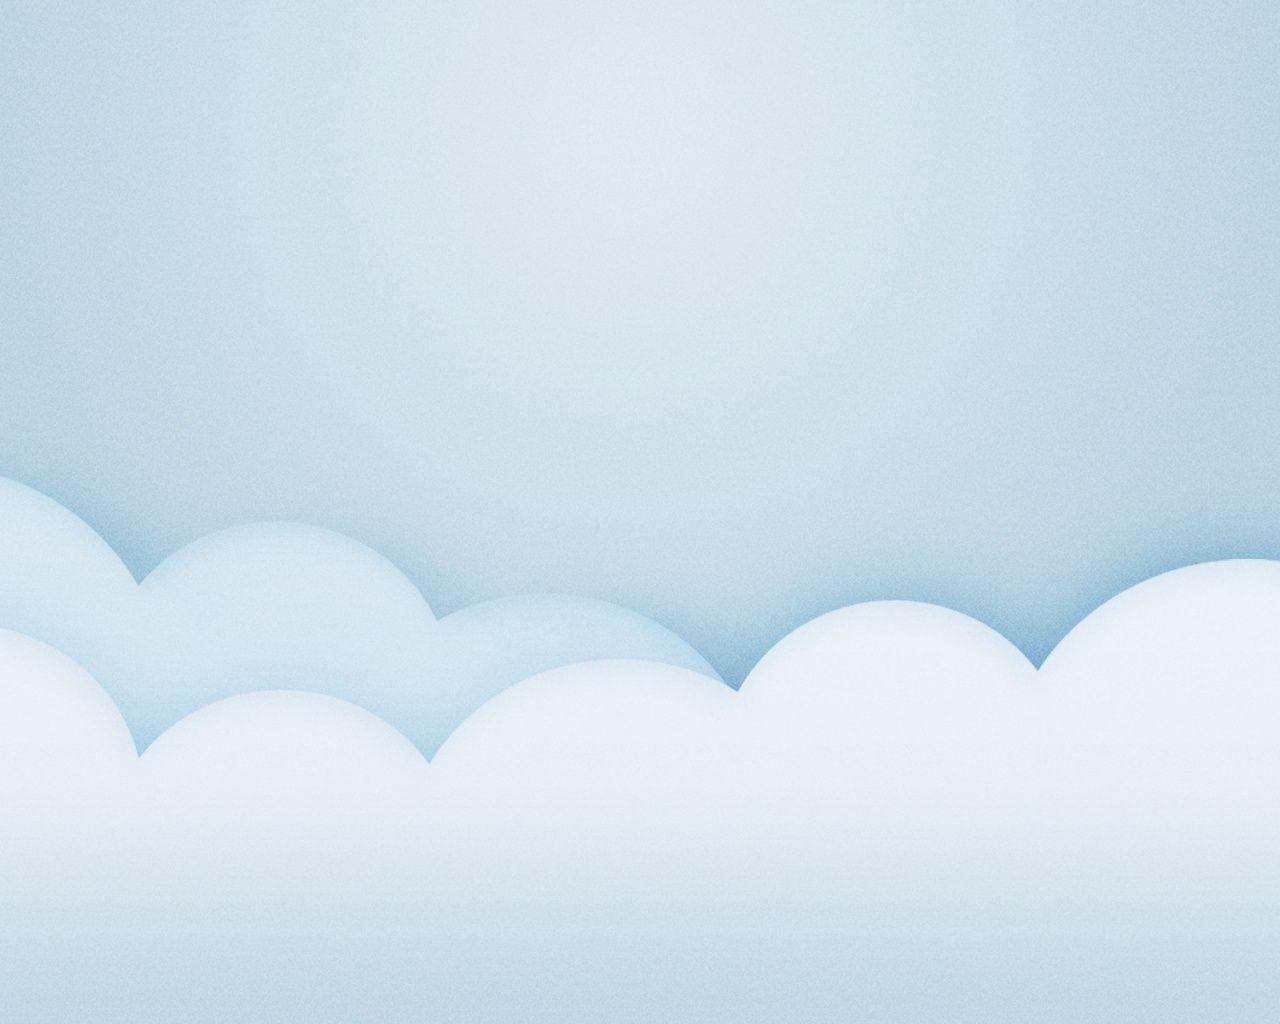 Light Blue Minimalistic Clouds desktop PC and Mac wallpaper